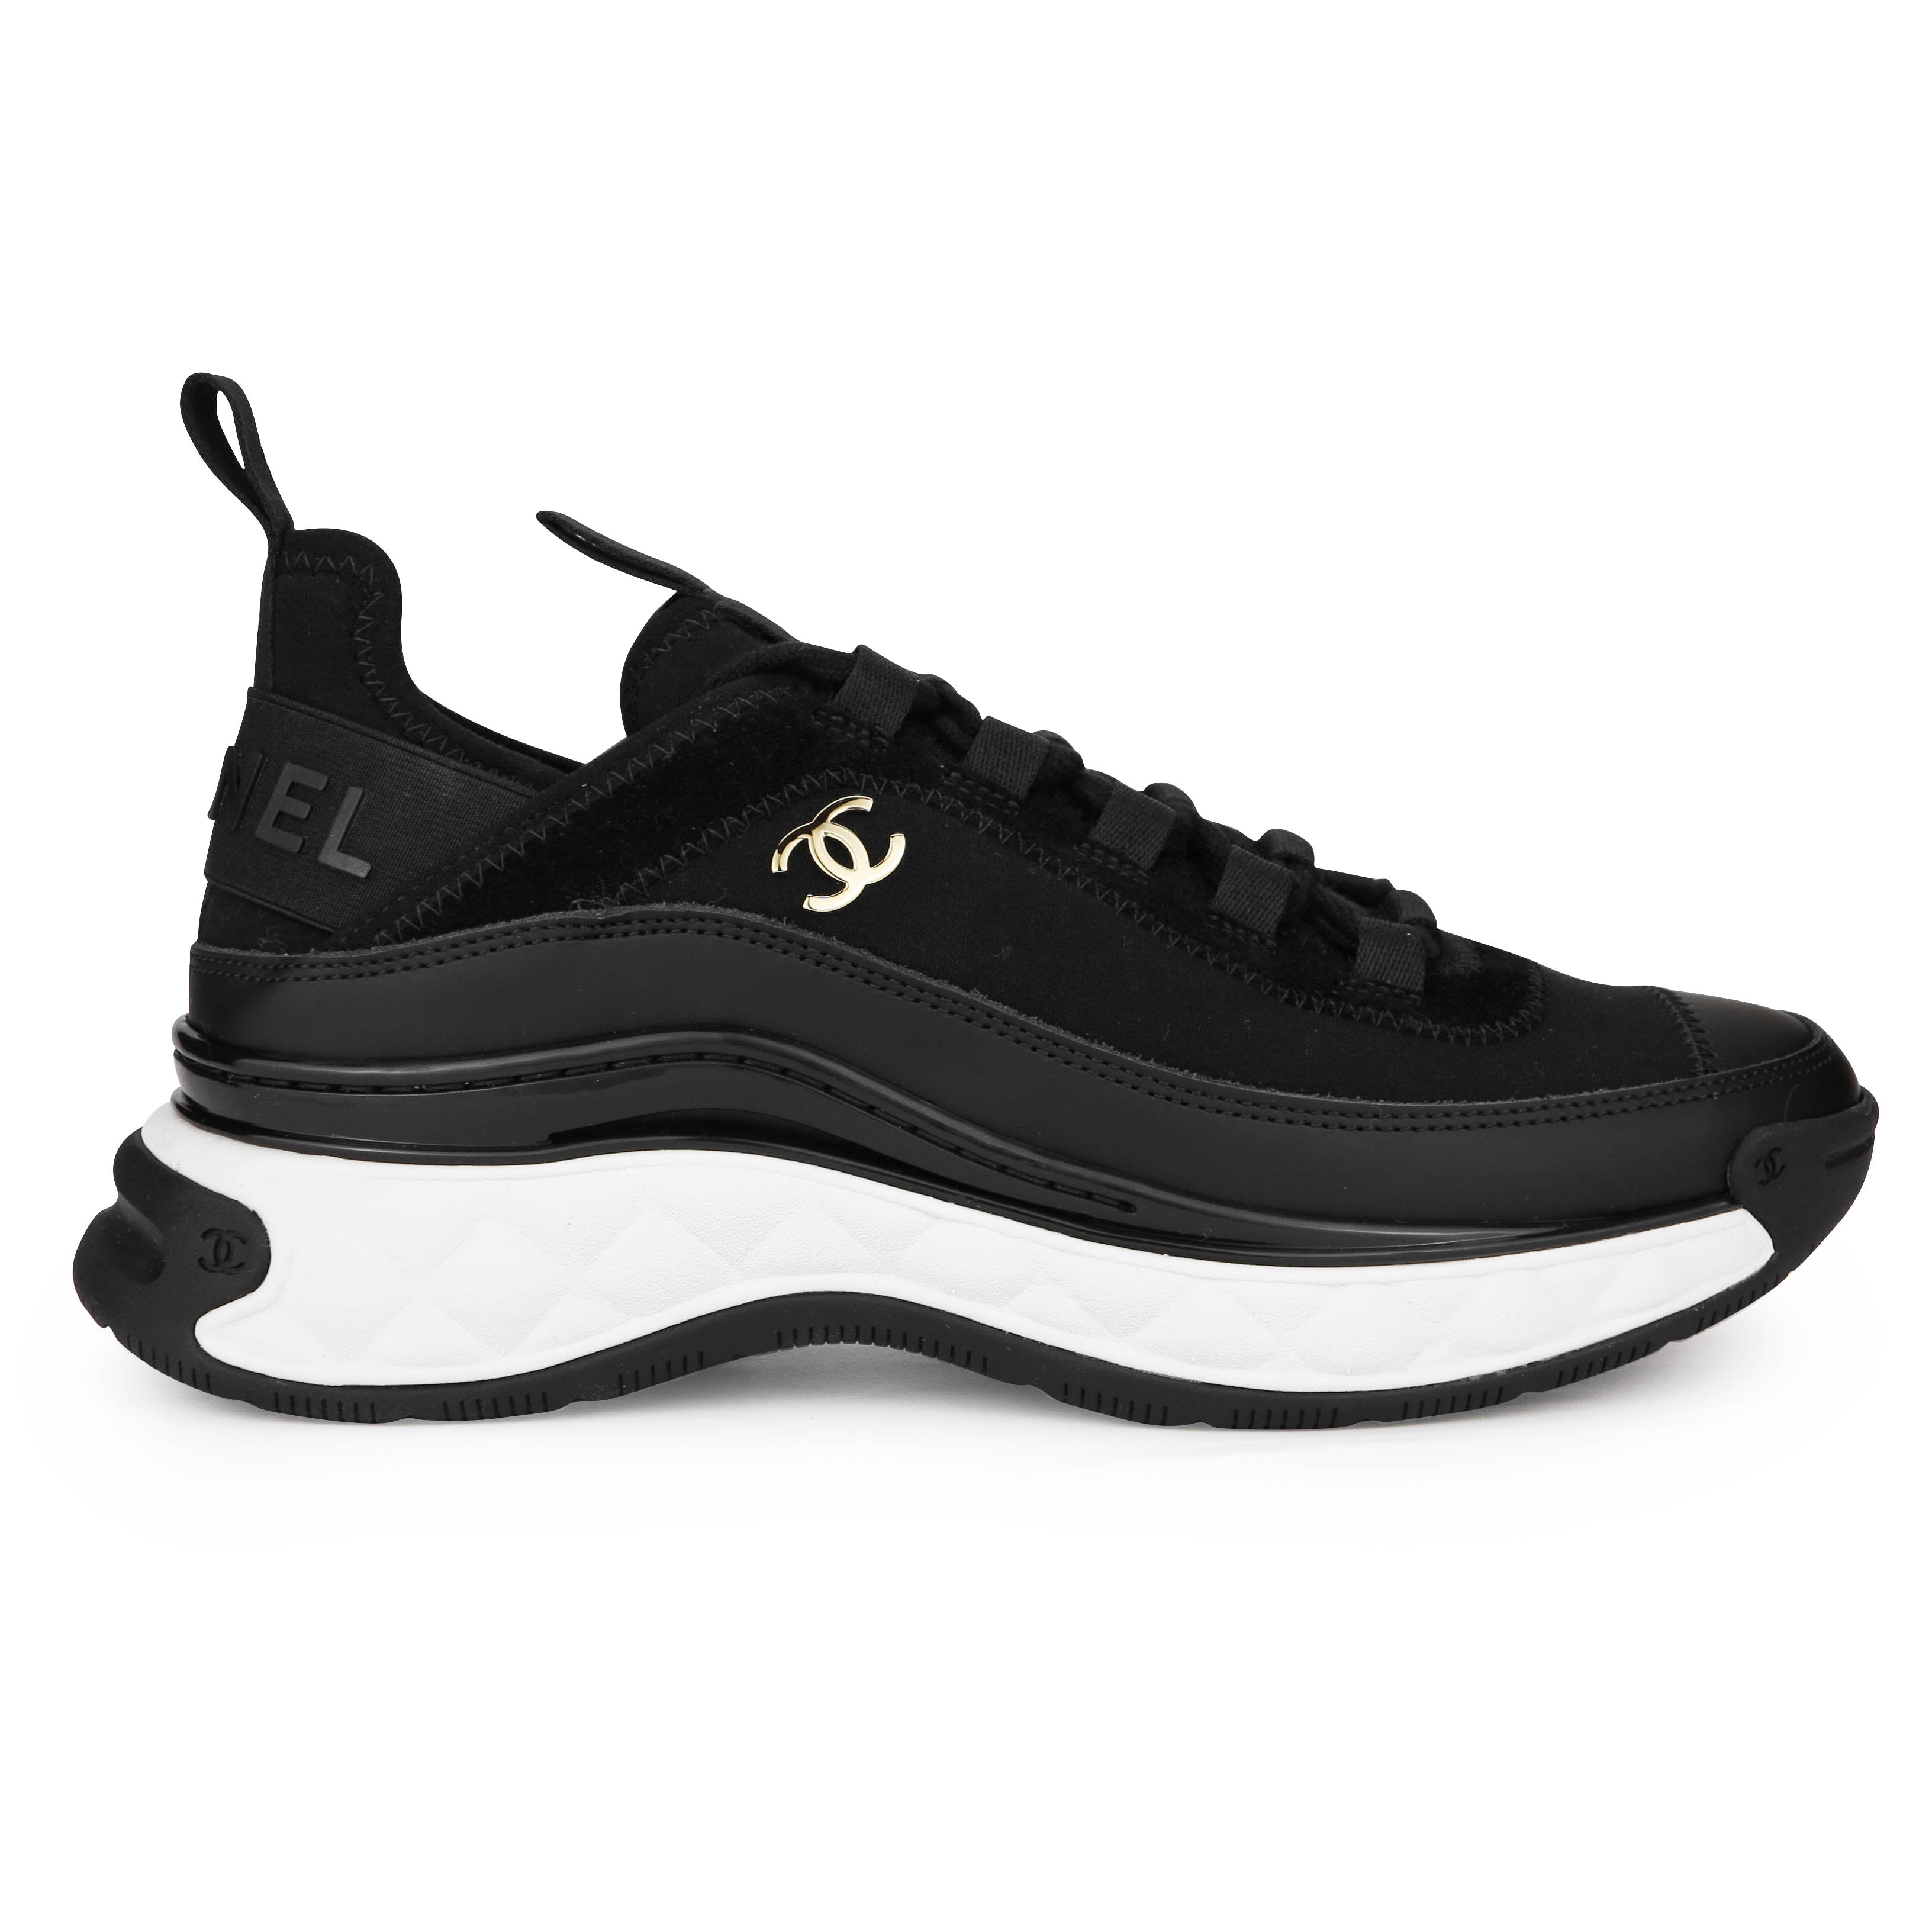 PUMA Men's Smash v2 Sneakers Black White Shoes New 365215-04